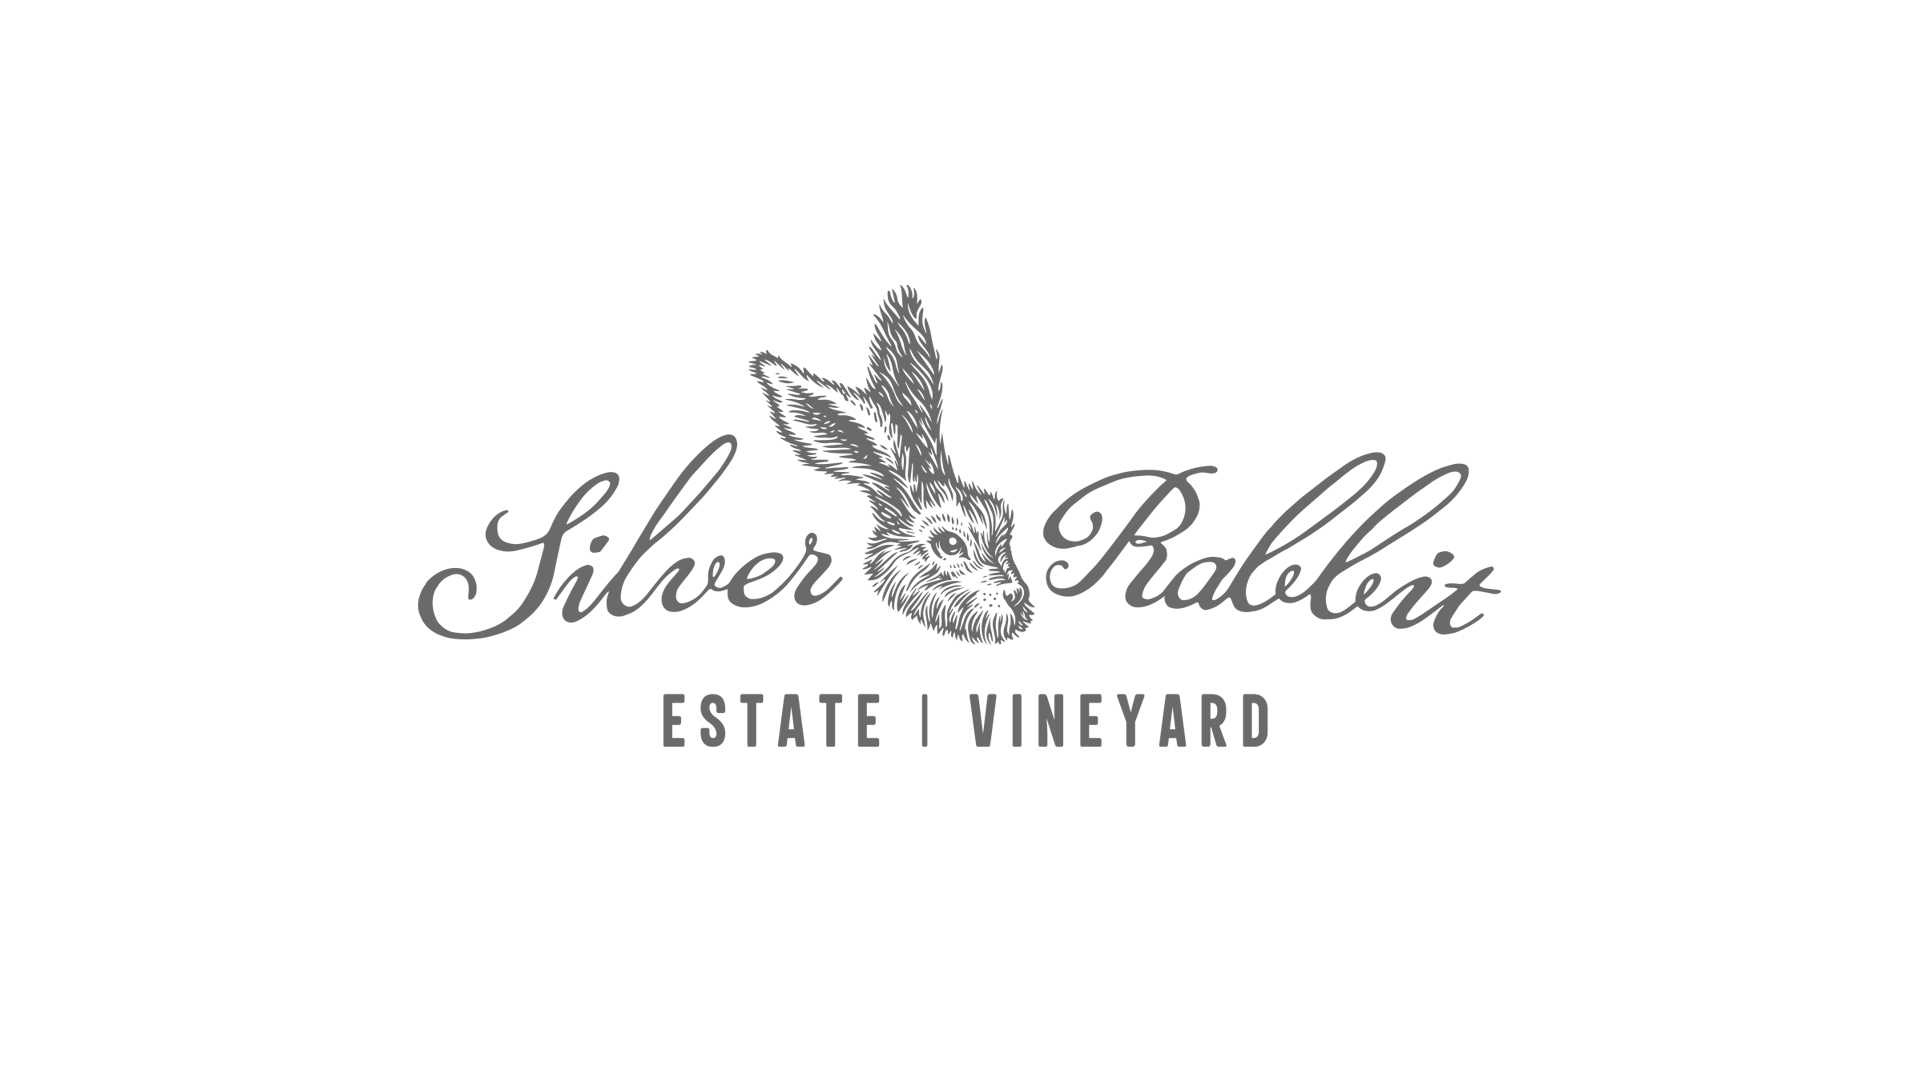 featured image three:Silver Rabbit Identity